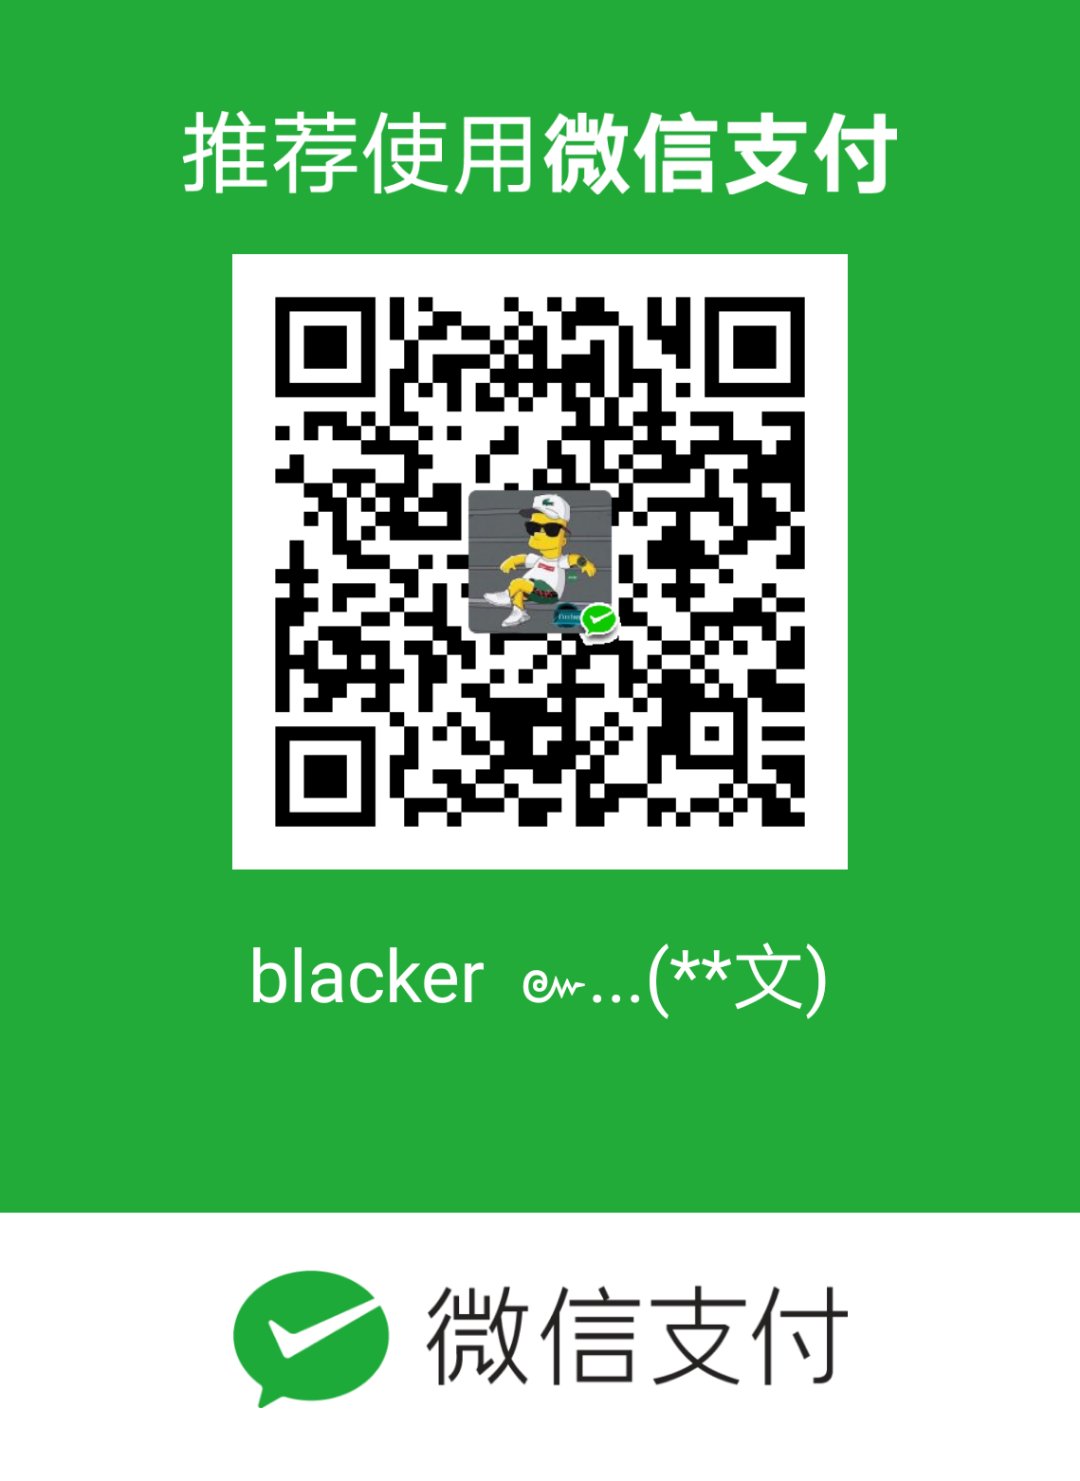 blacker WeChat Pay